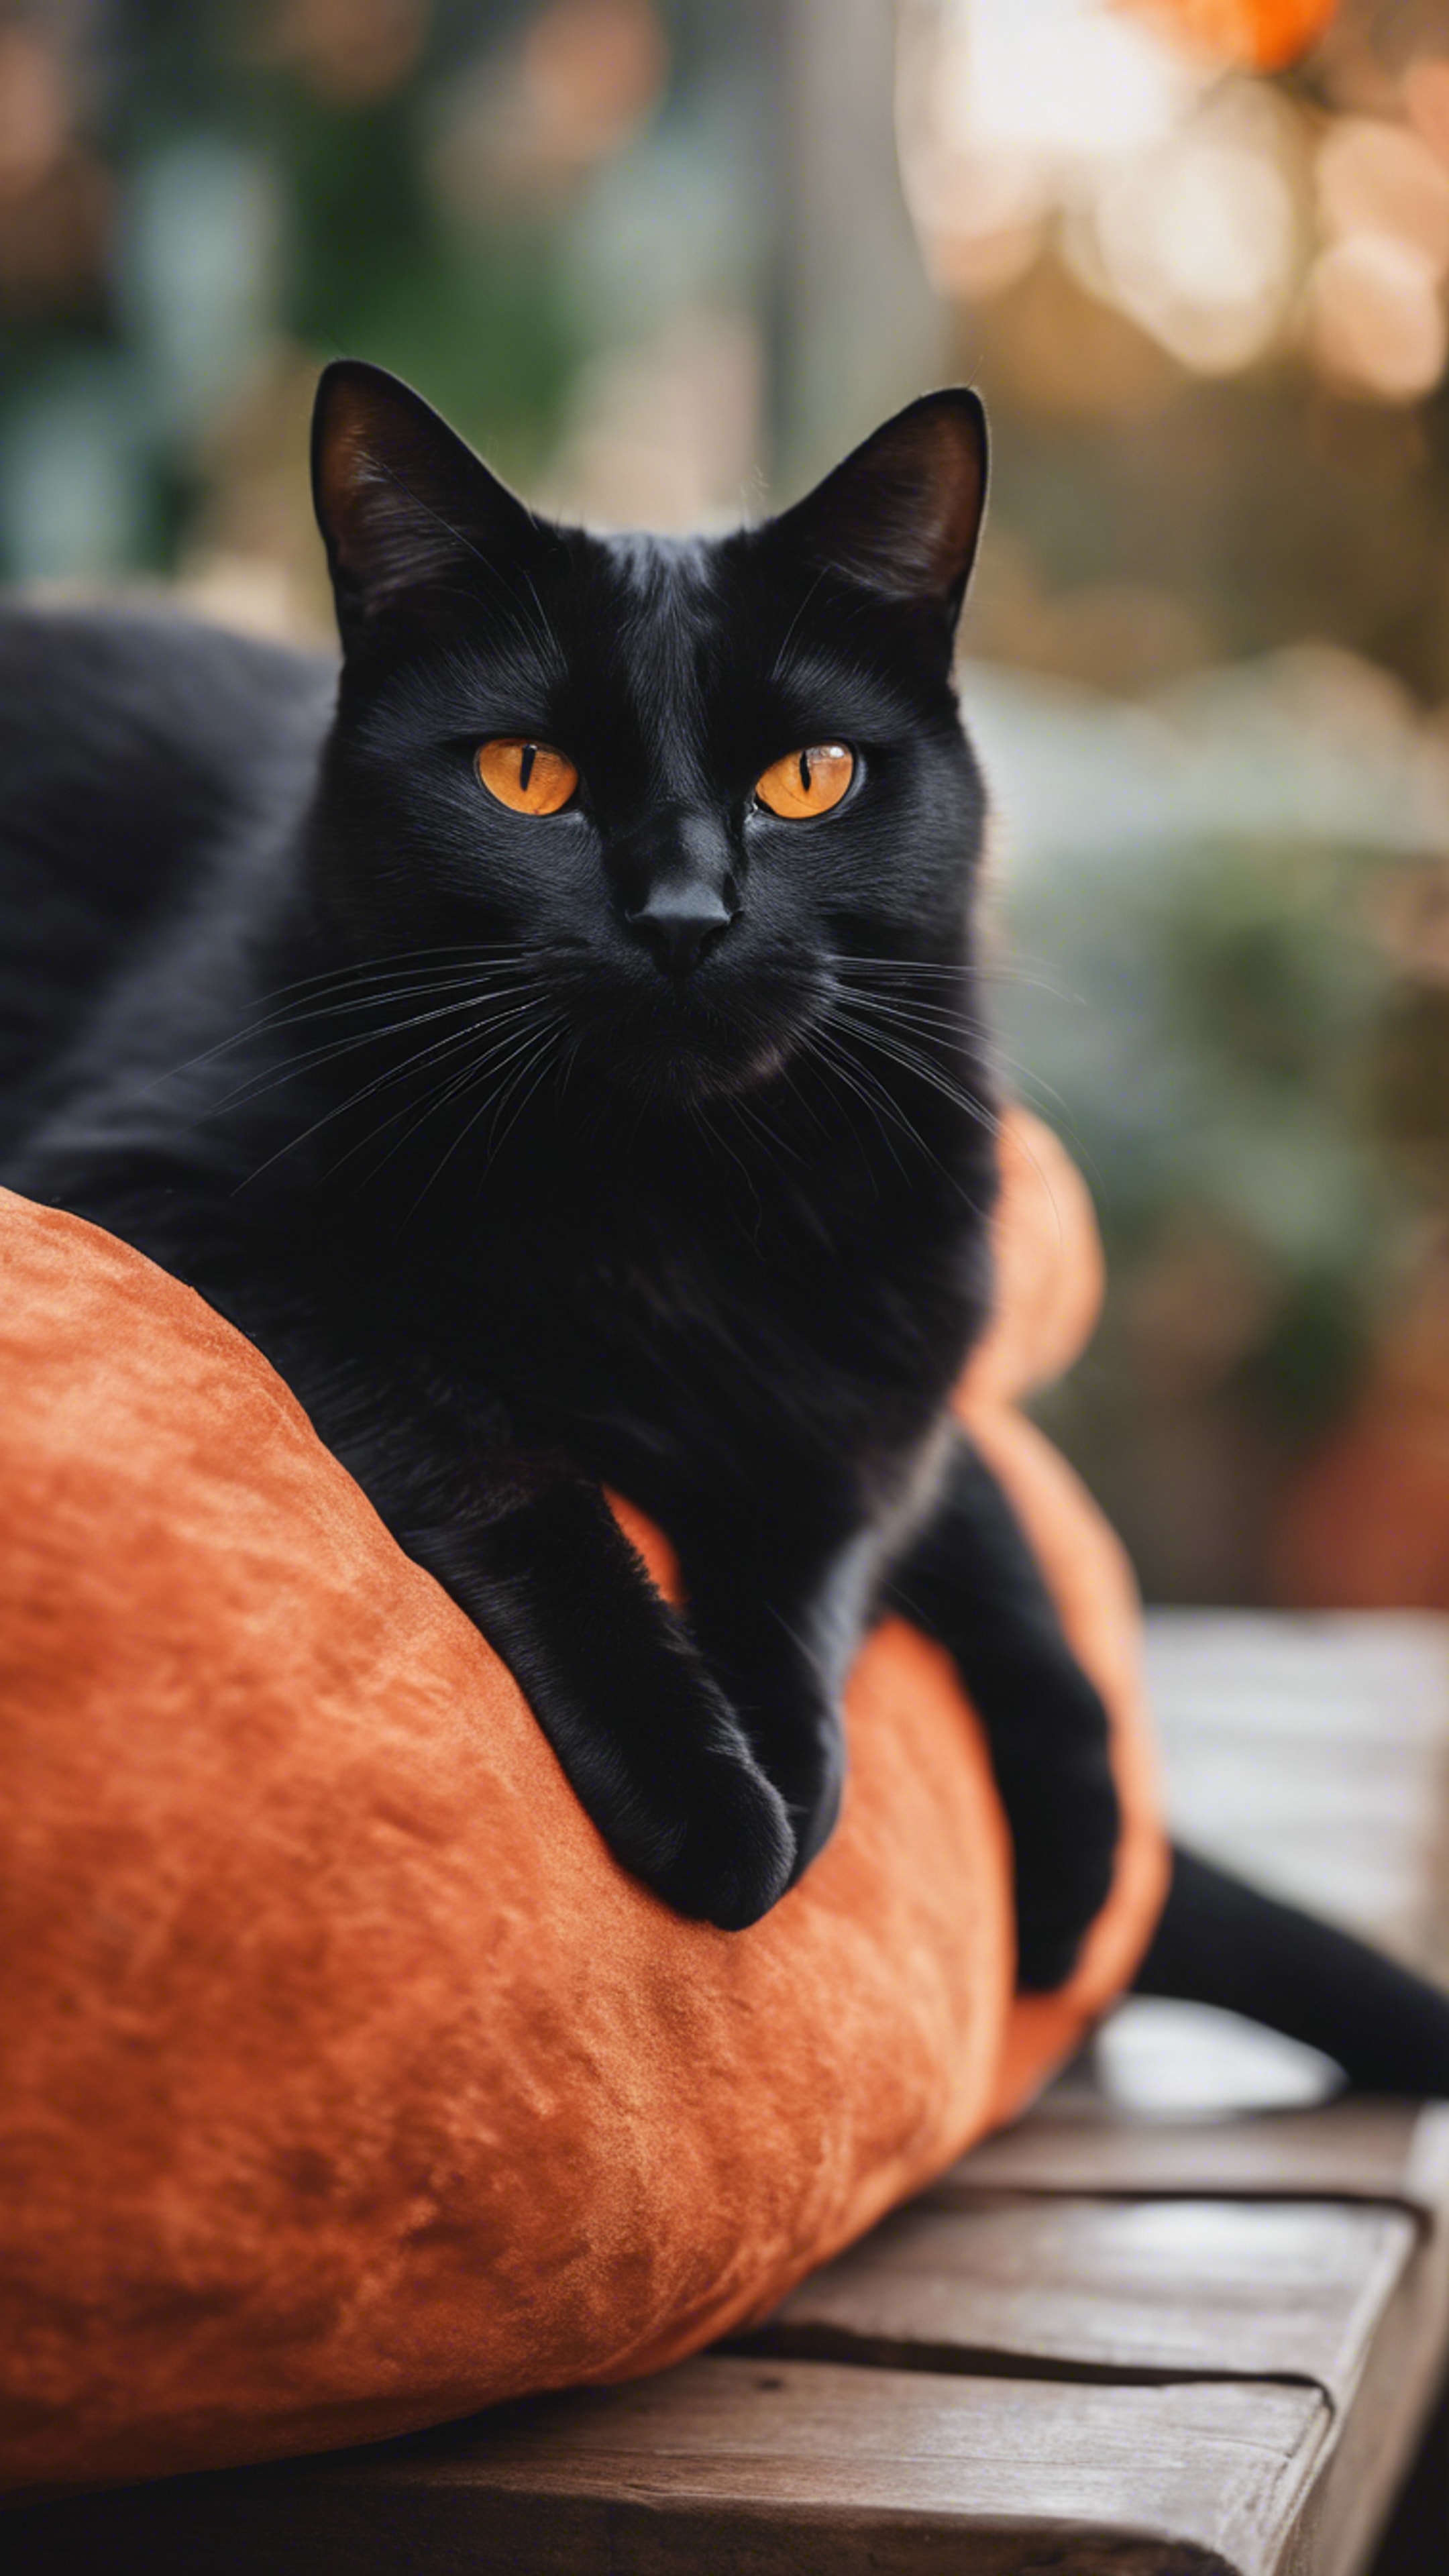 A charismatic black cat lounging on a vibrant orange cushion.壁紙[ba8f3a19f6294cba9862]